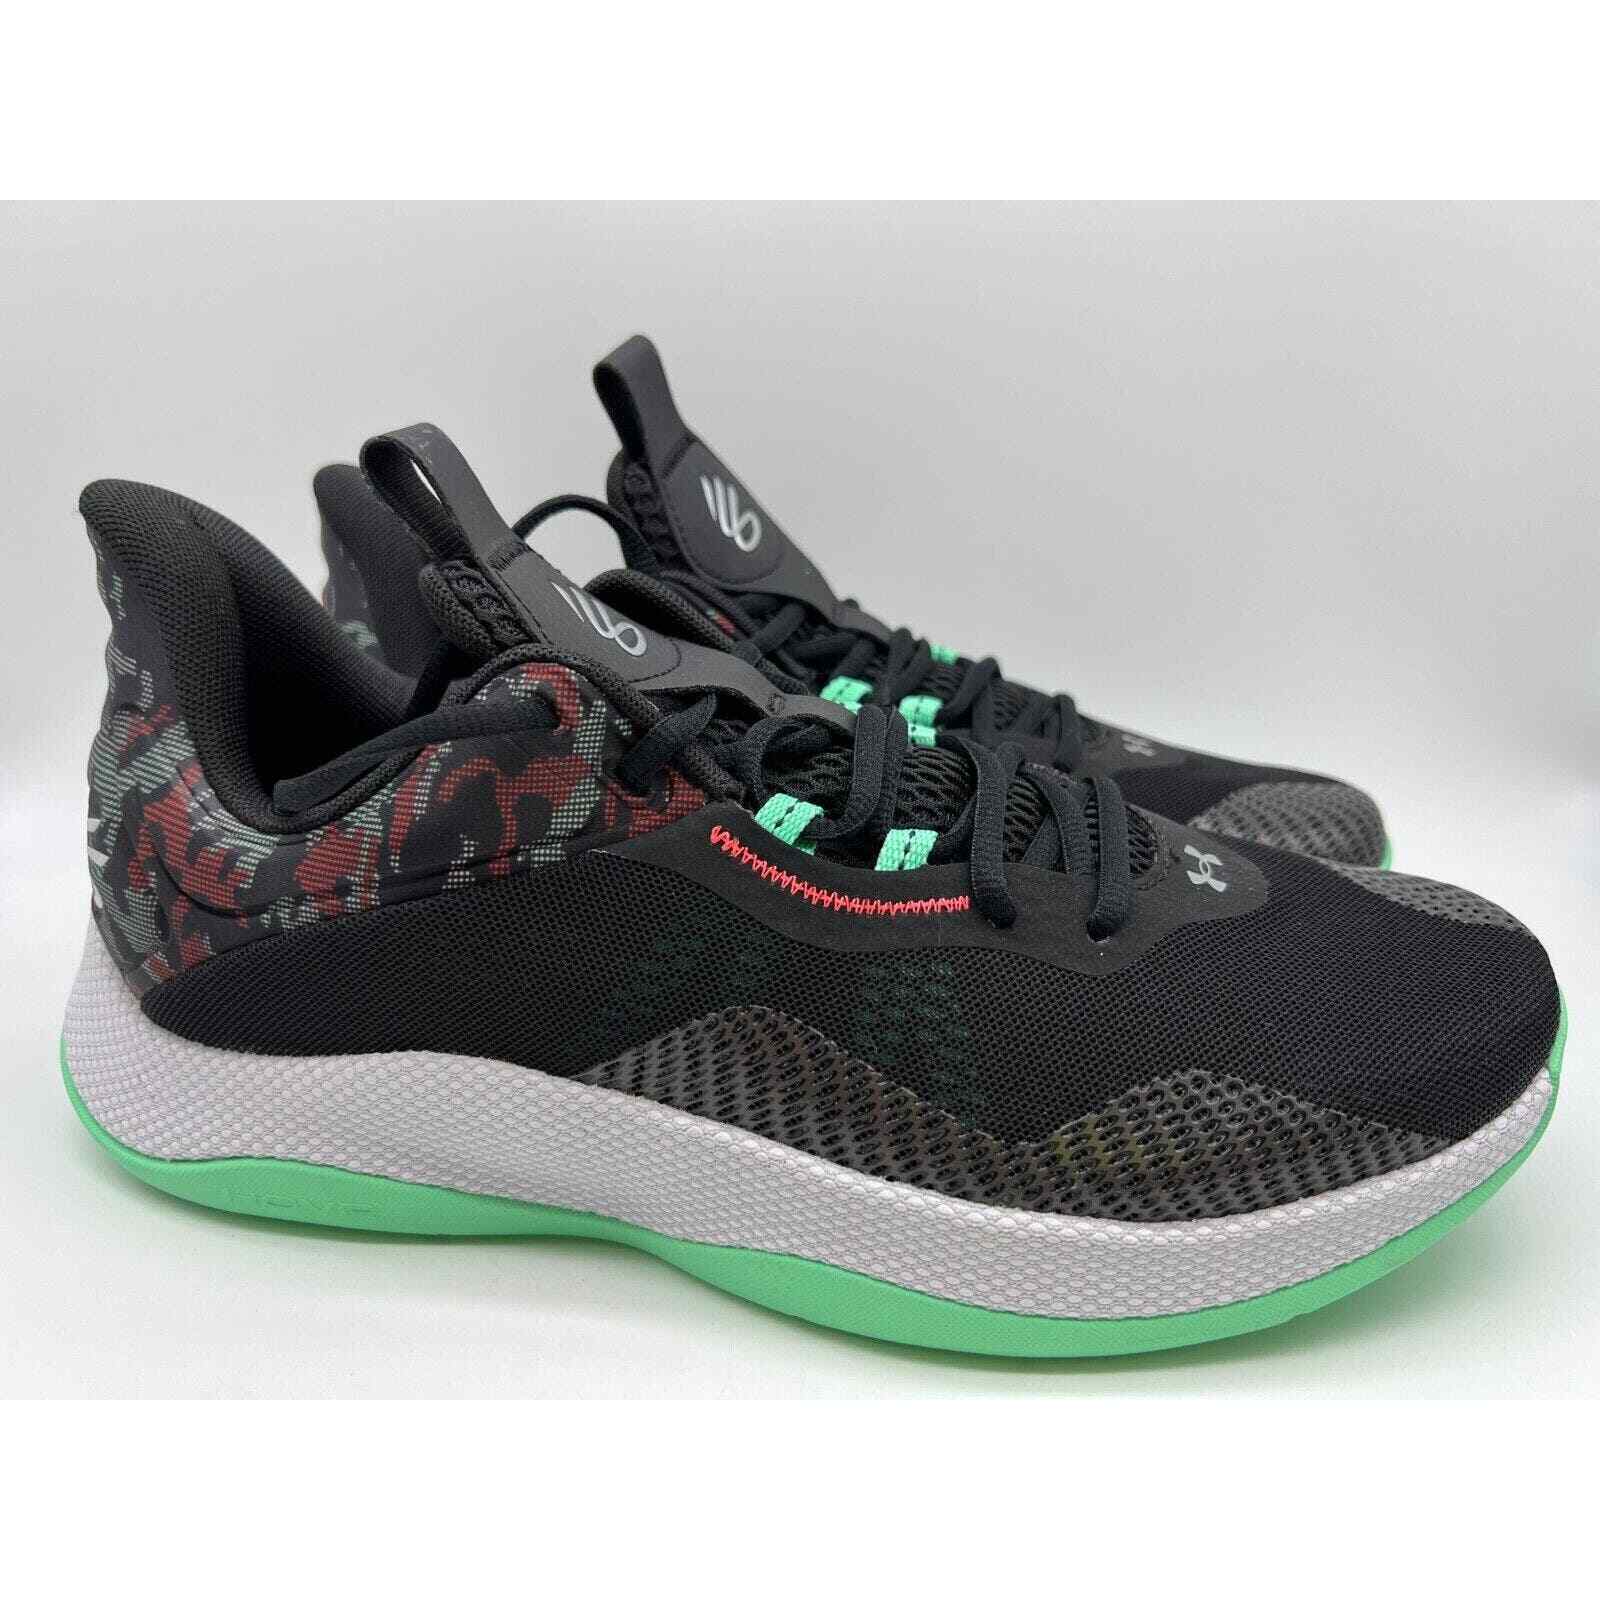 Nice Under Armour Curry HOVR Splash 2 Basketball Shoes Black Antifreeze Men’s Size 11 on eBay